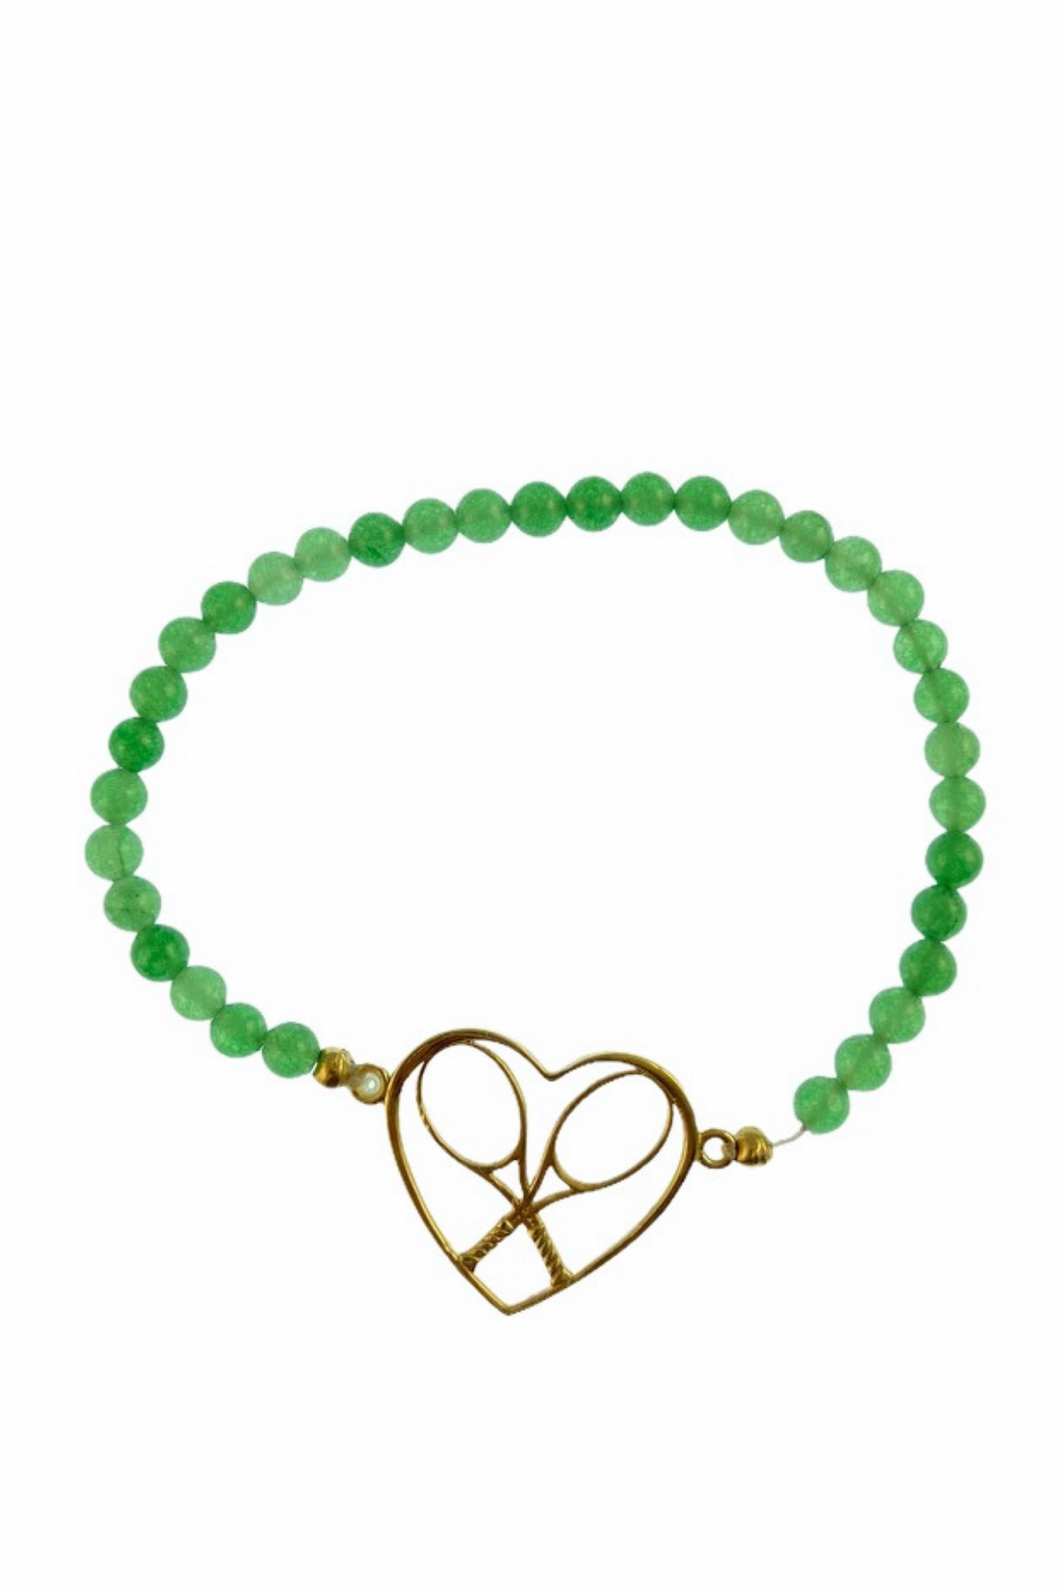 Gold Heart + Rackets Bracelet with Jade Beads - I LOVE MY DOUBLES PARTNER!!!